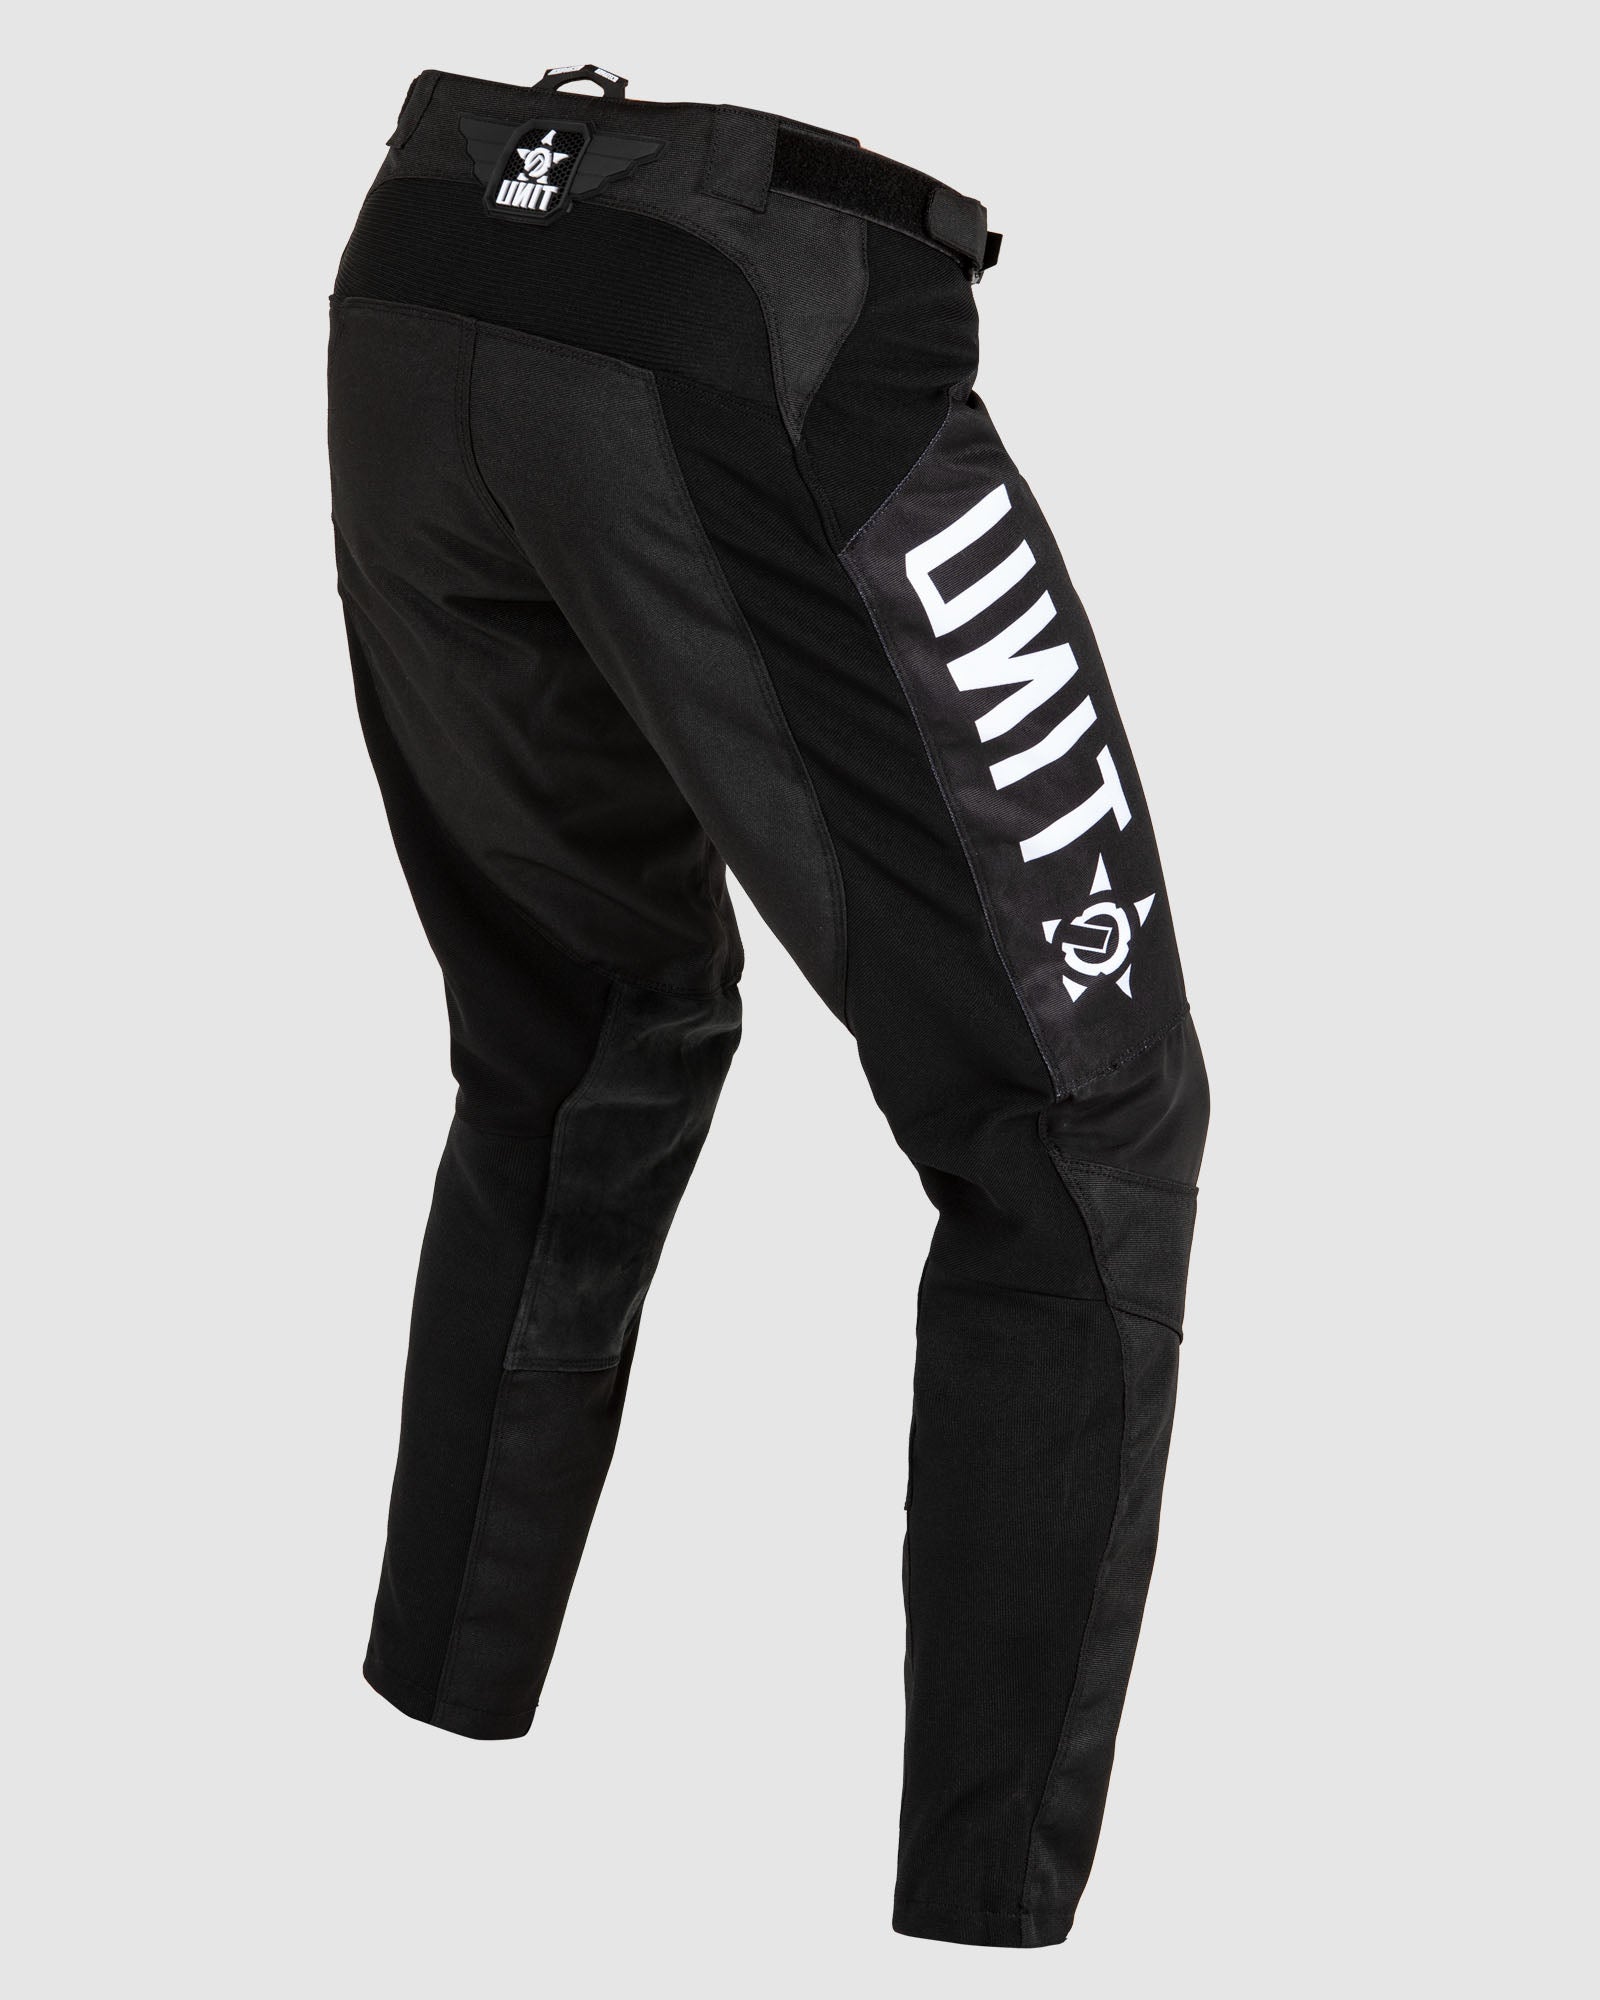 Klim XC Lite Youth MX Pants Black-Gold - Now 41% Savings | 24MX